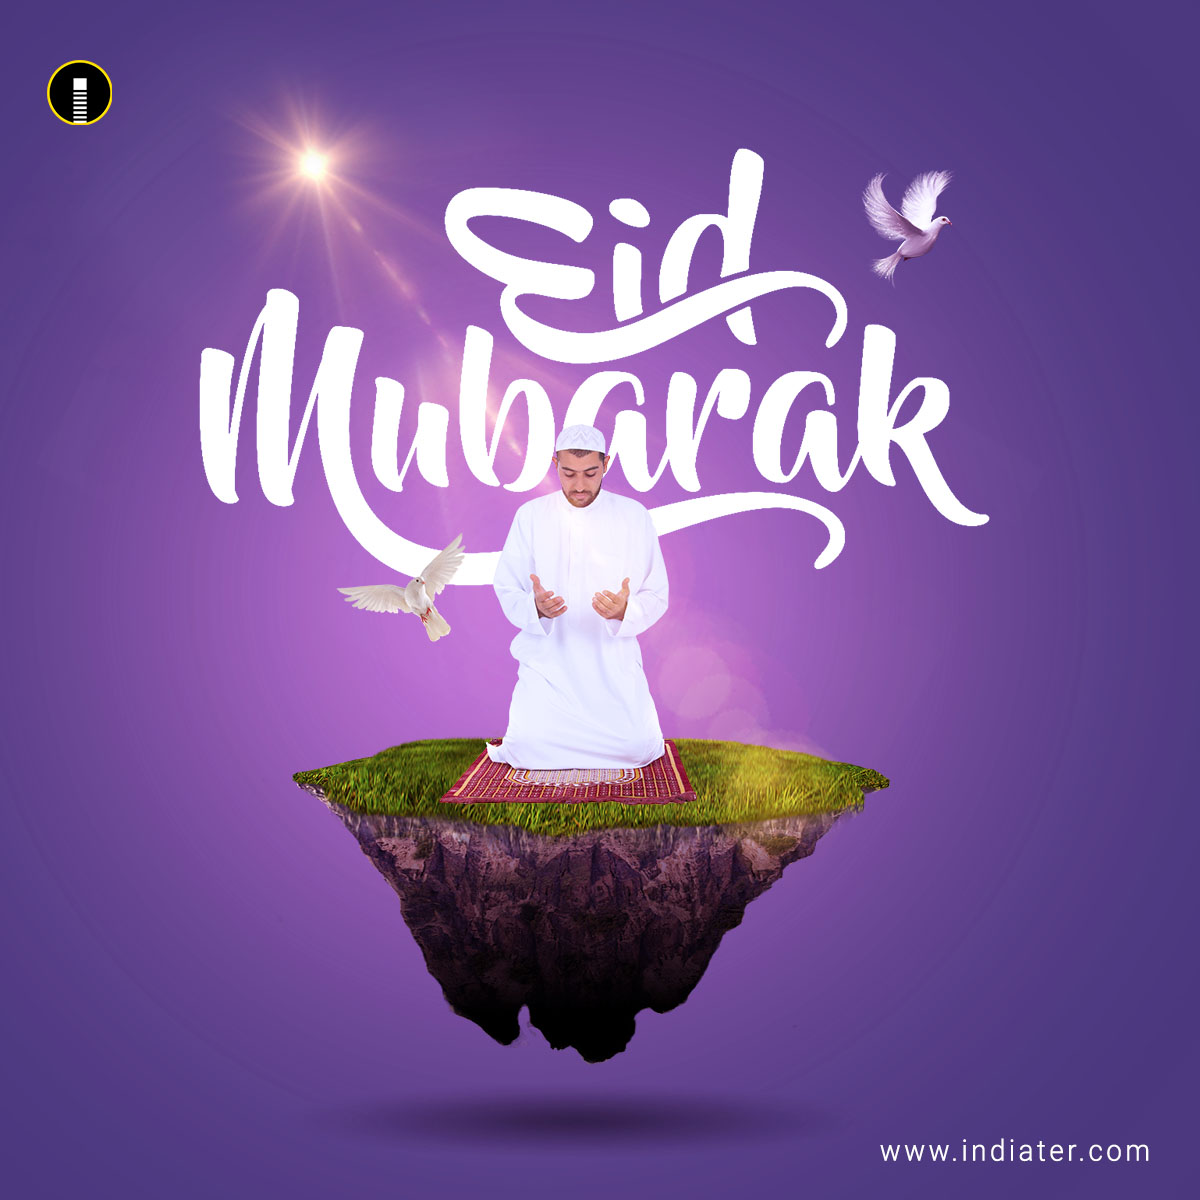 Eid Mubarak Cards Template Free PSD Download - Indiater